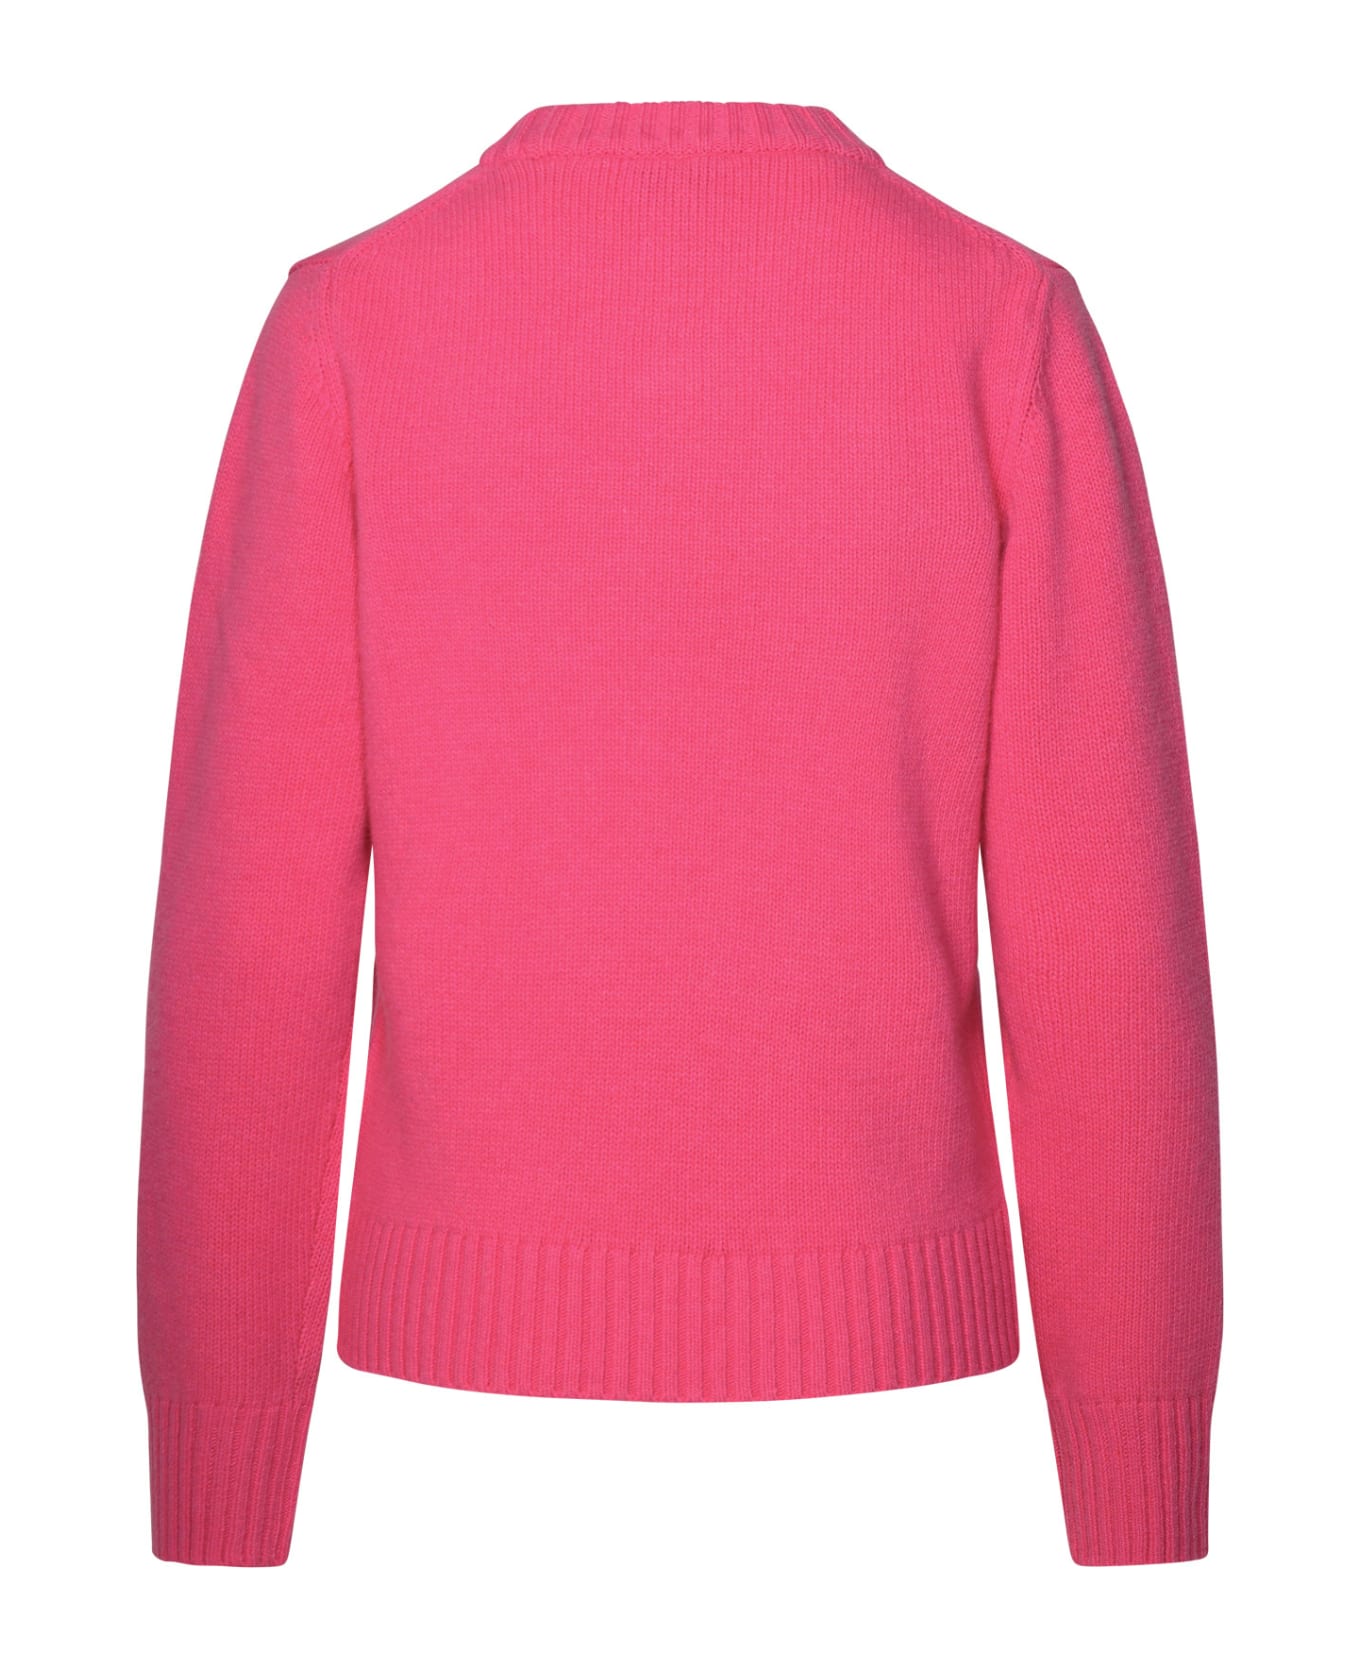 Ganni Fuchsia Wool Blend Sweater - Fuchsia